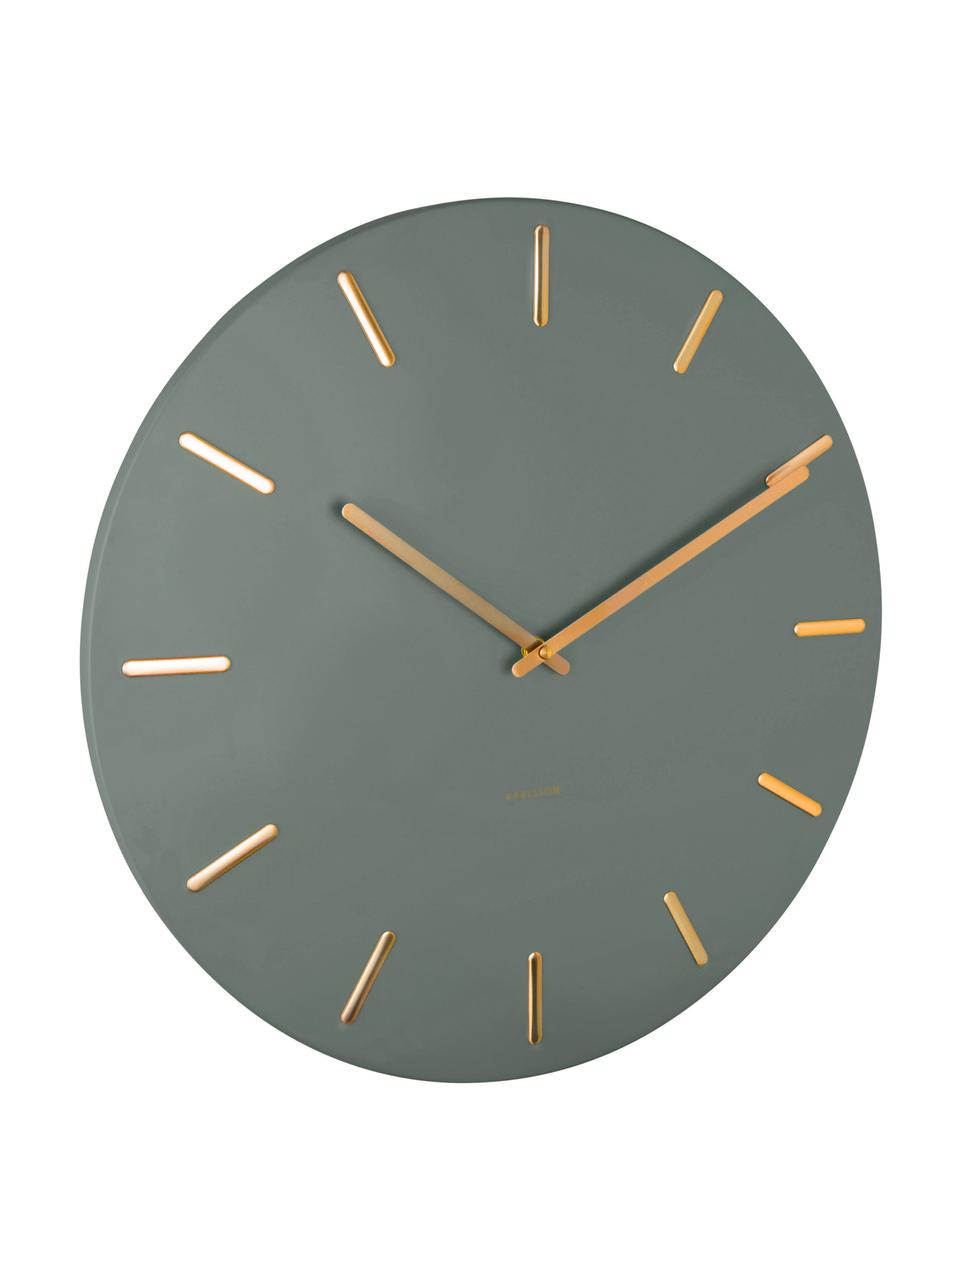 Reloj de pared grande Charm, Metal recubierto, Verde, Ø 45 cm